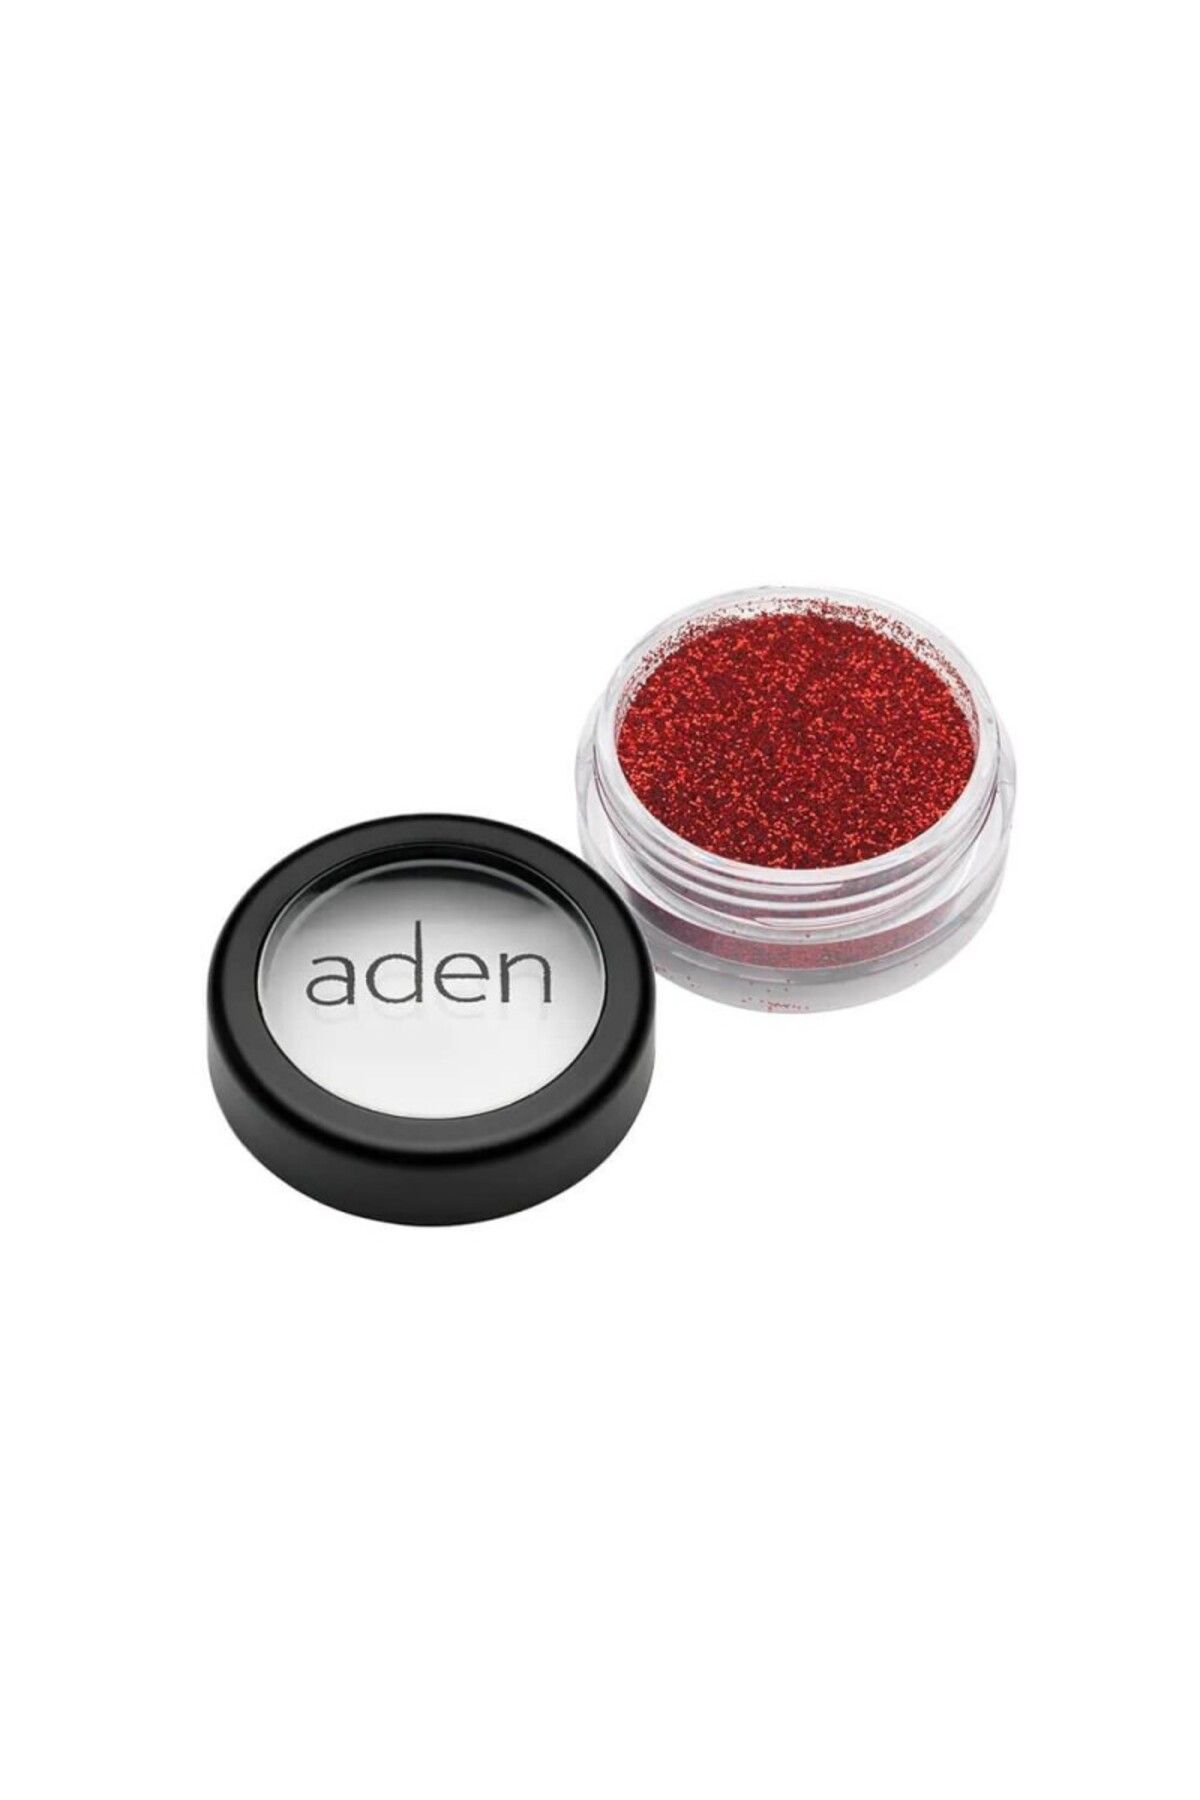 Aden Glitter Powder ( 26 Glitter Bordeaux )